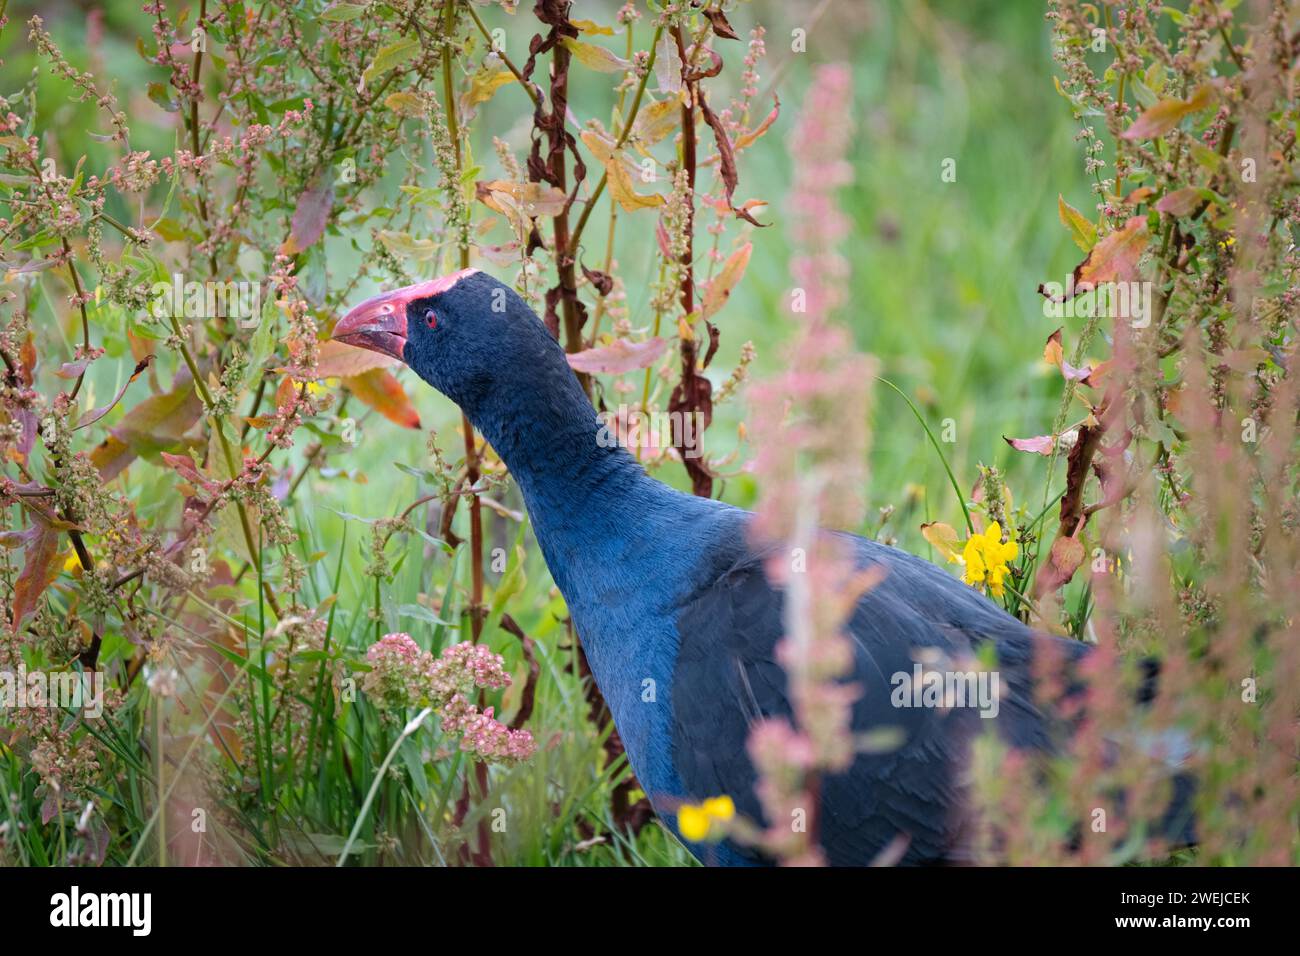 A pukeko wandering through the dense undergrowth of the wetland habitat. Stock Photo